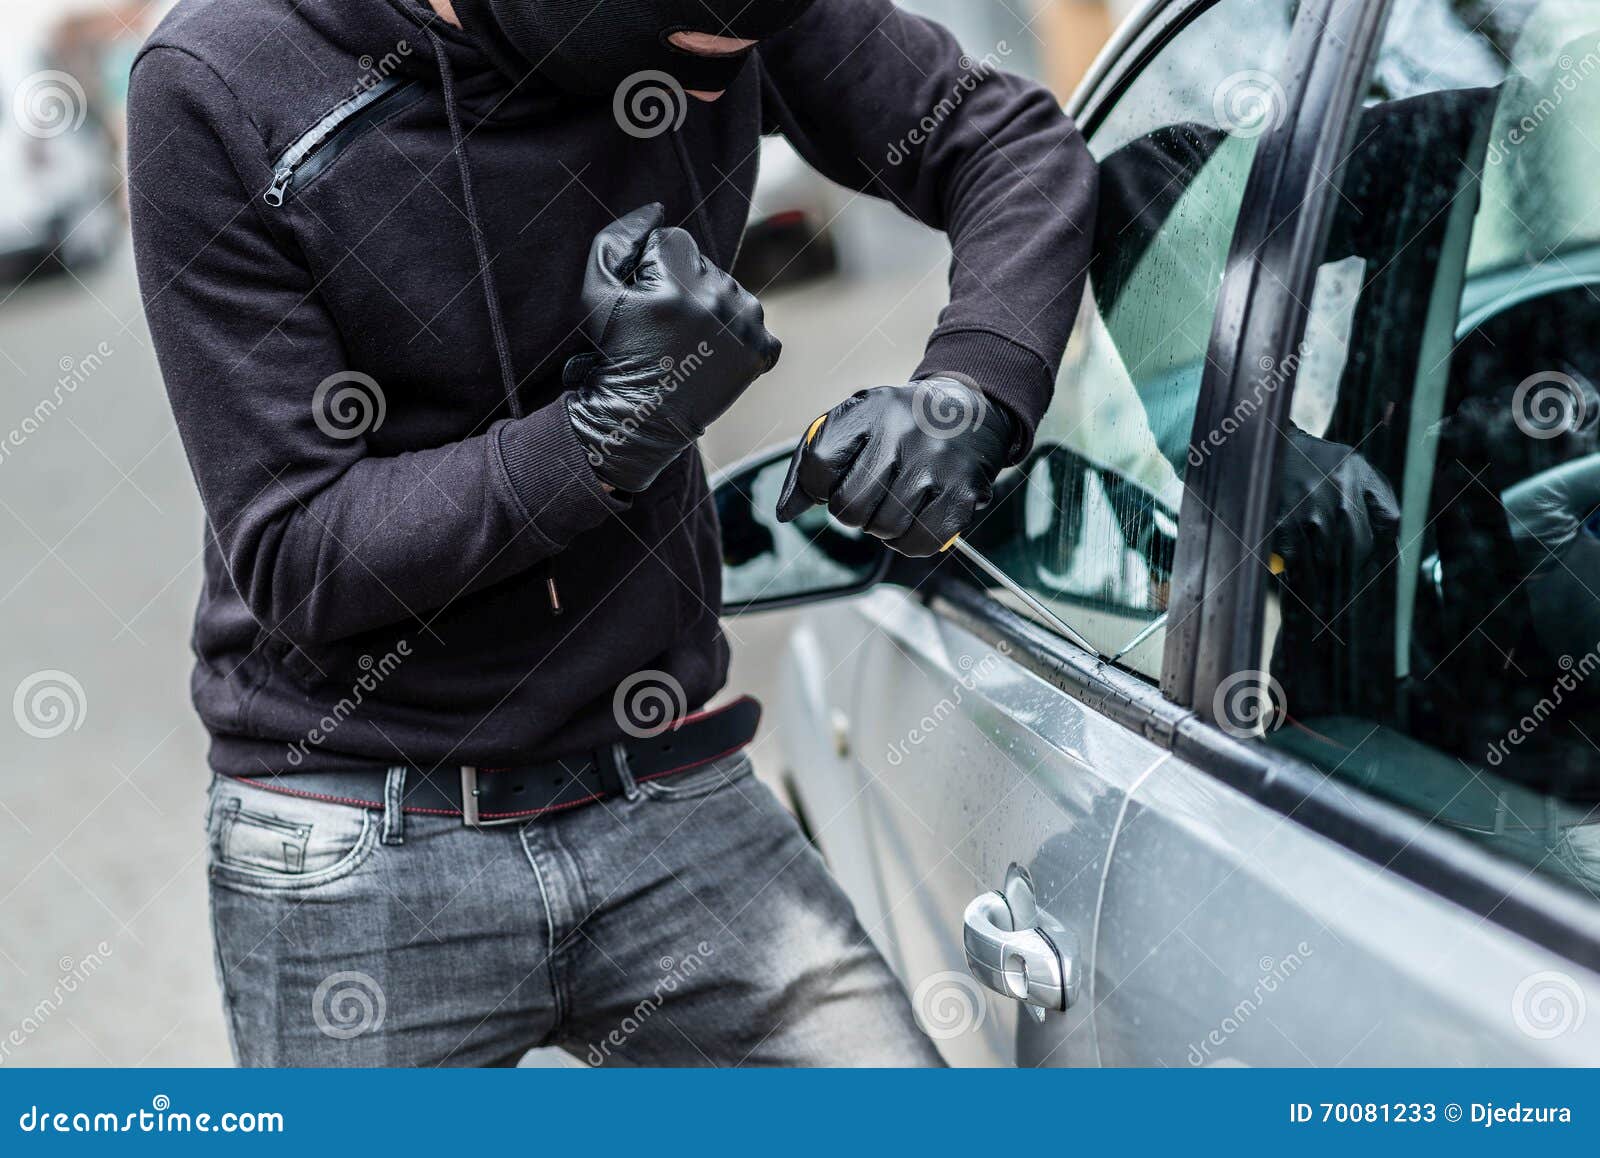 car thief, car theft